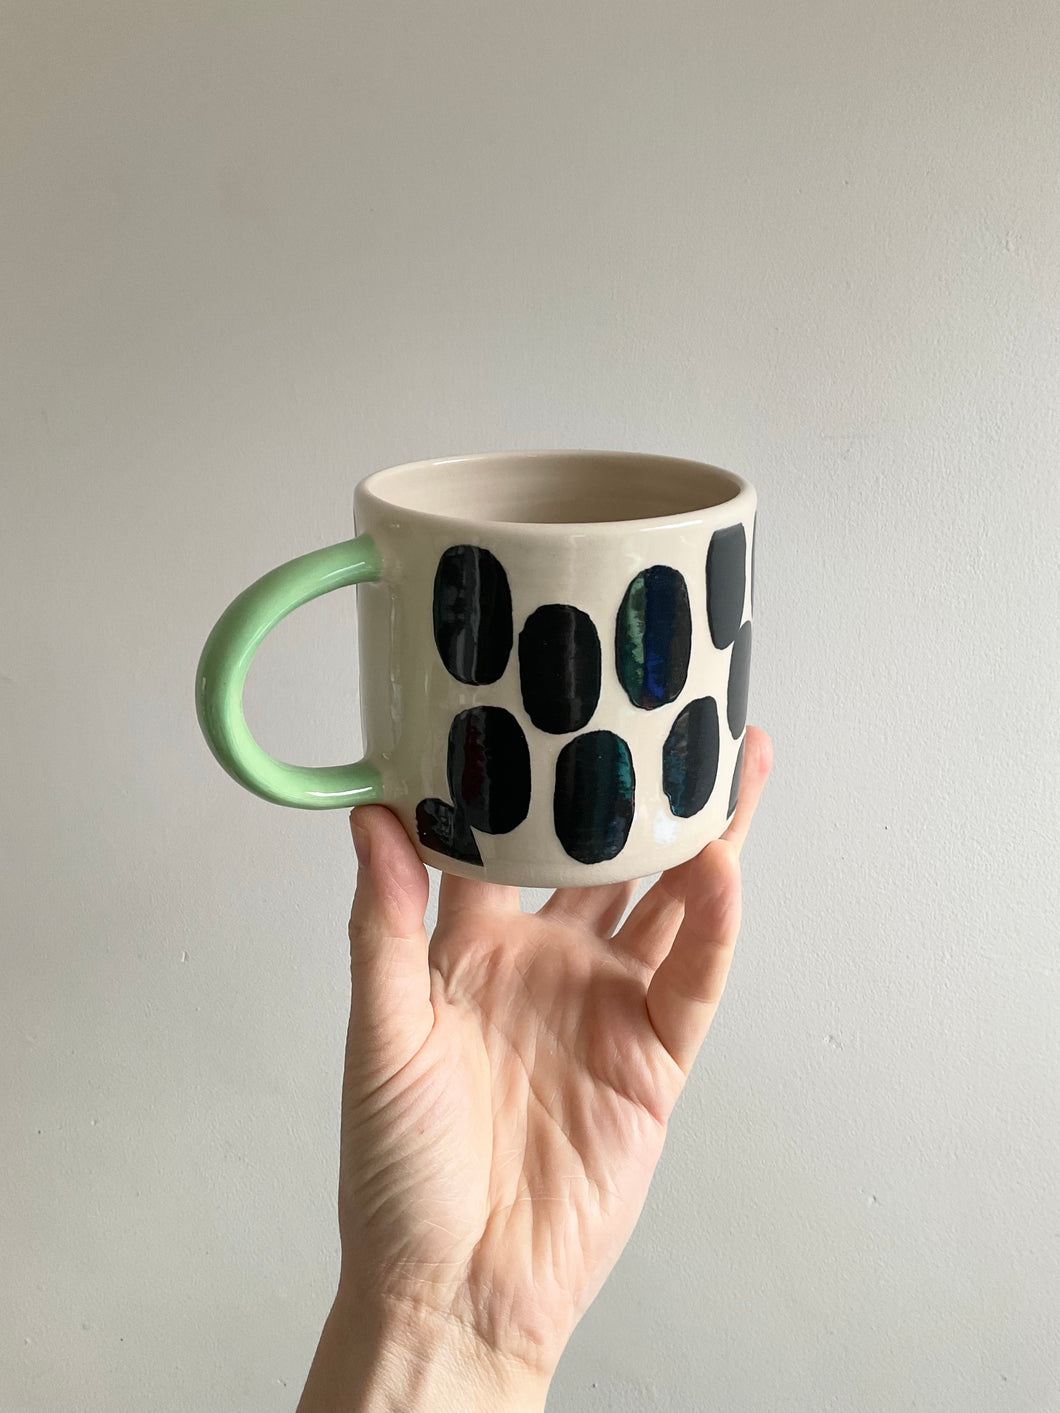 Monochrome Blobs Mug with Green Handle